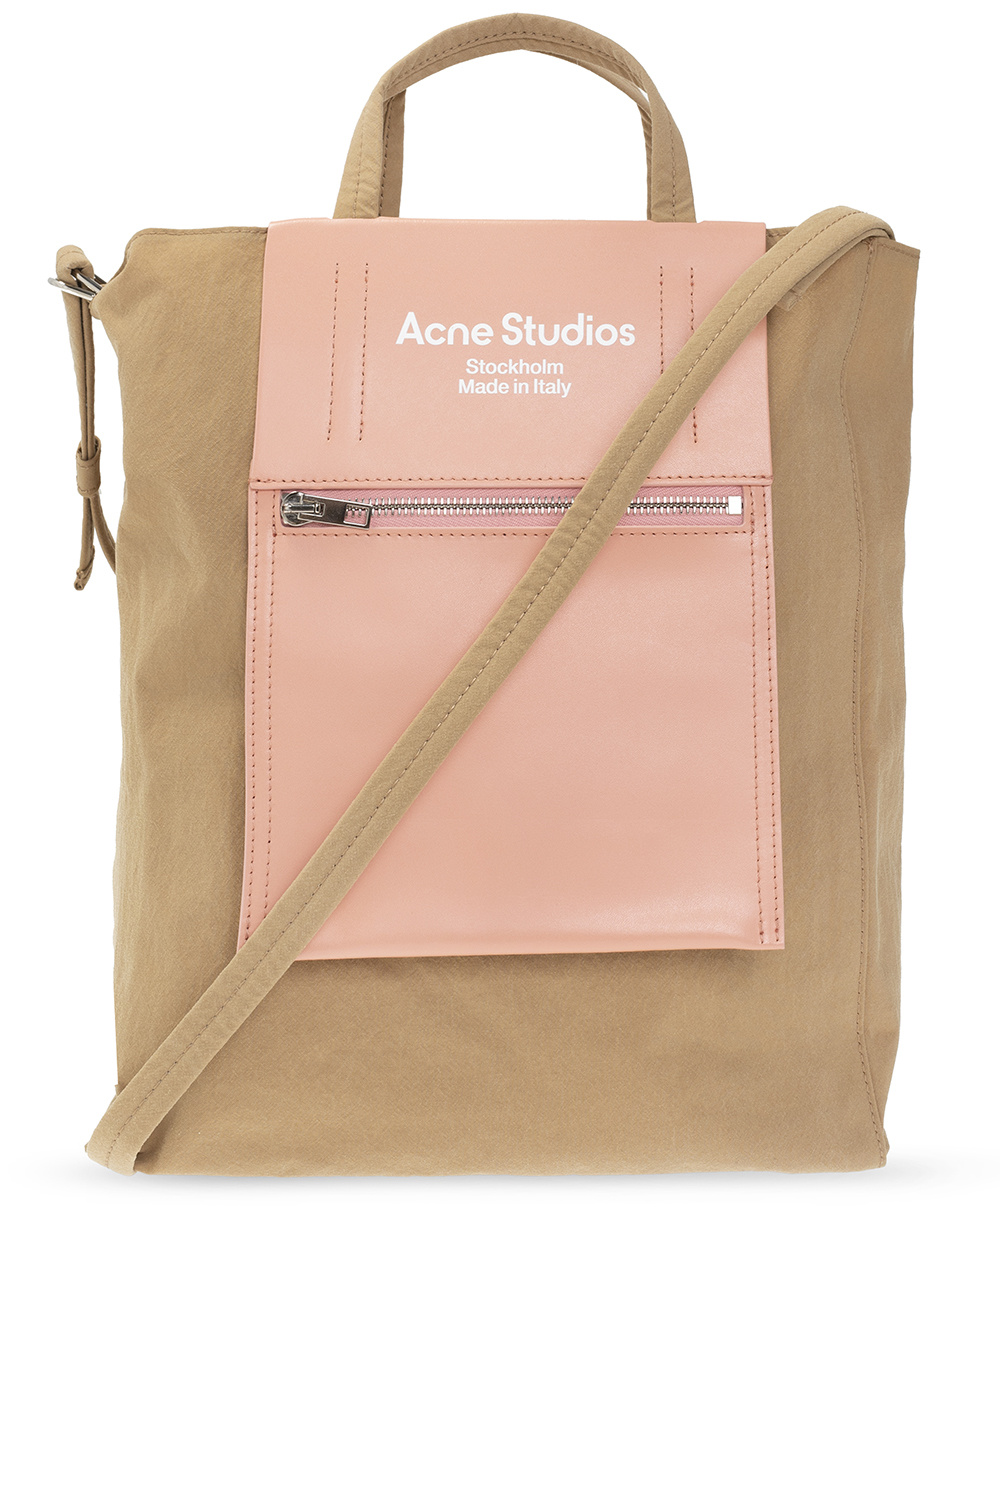 Acne Studios ‘Baker Out Medium’ shopper bag